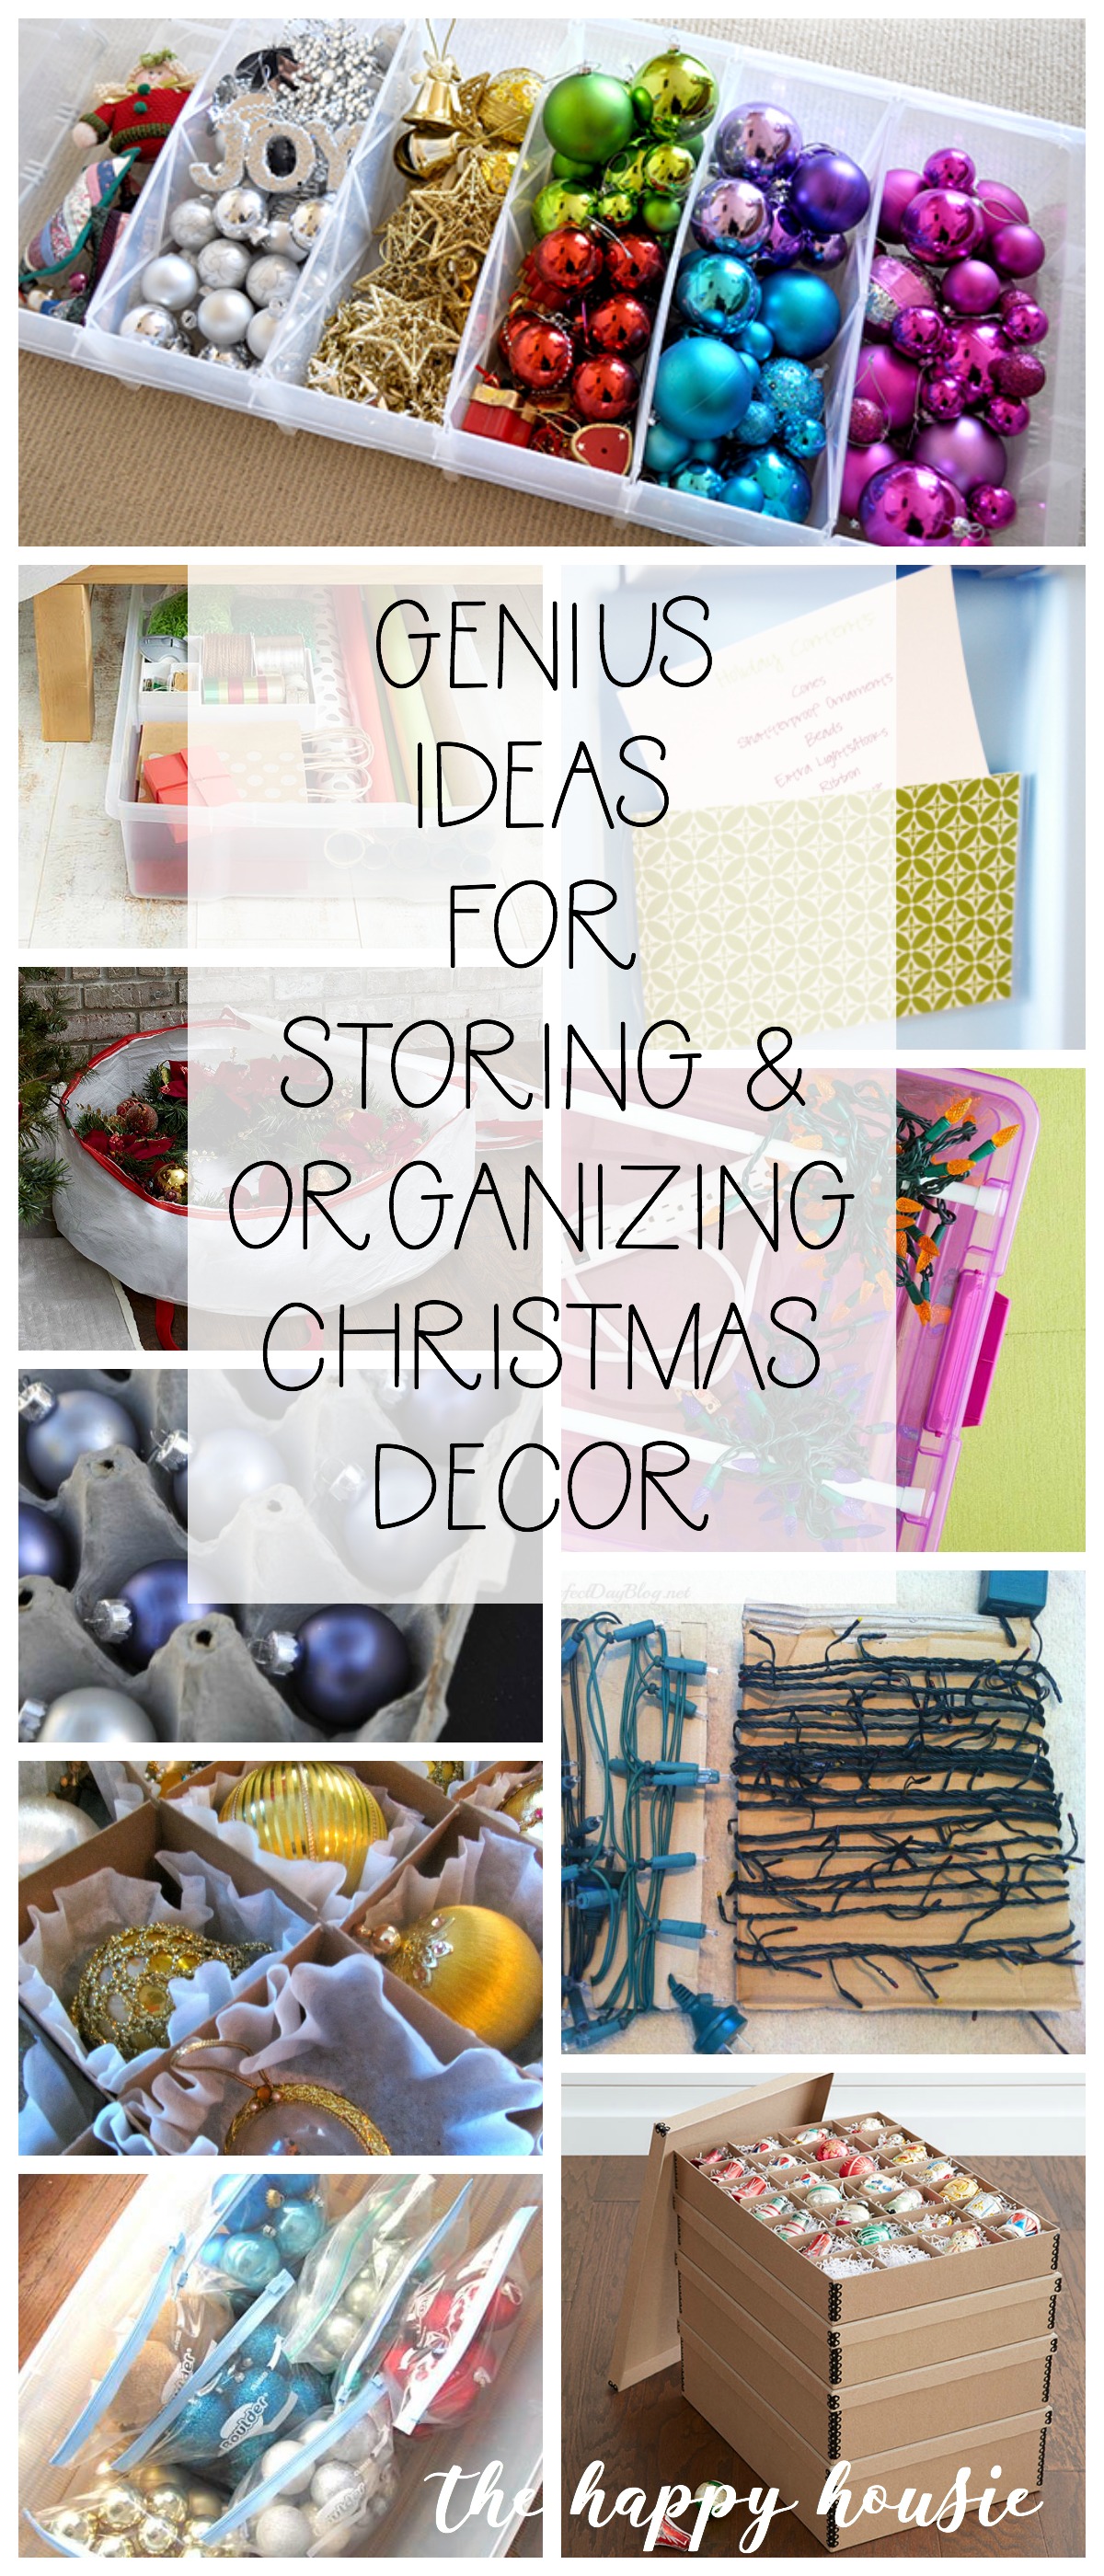 Genius Ideas For Storing & Organizing Christmas Decor poster.